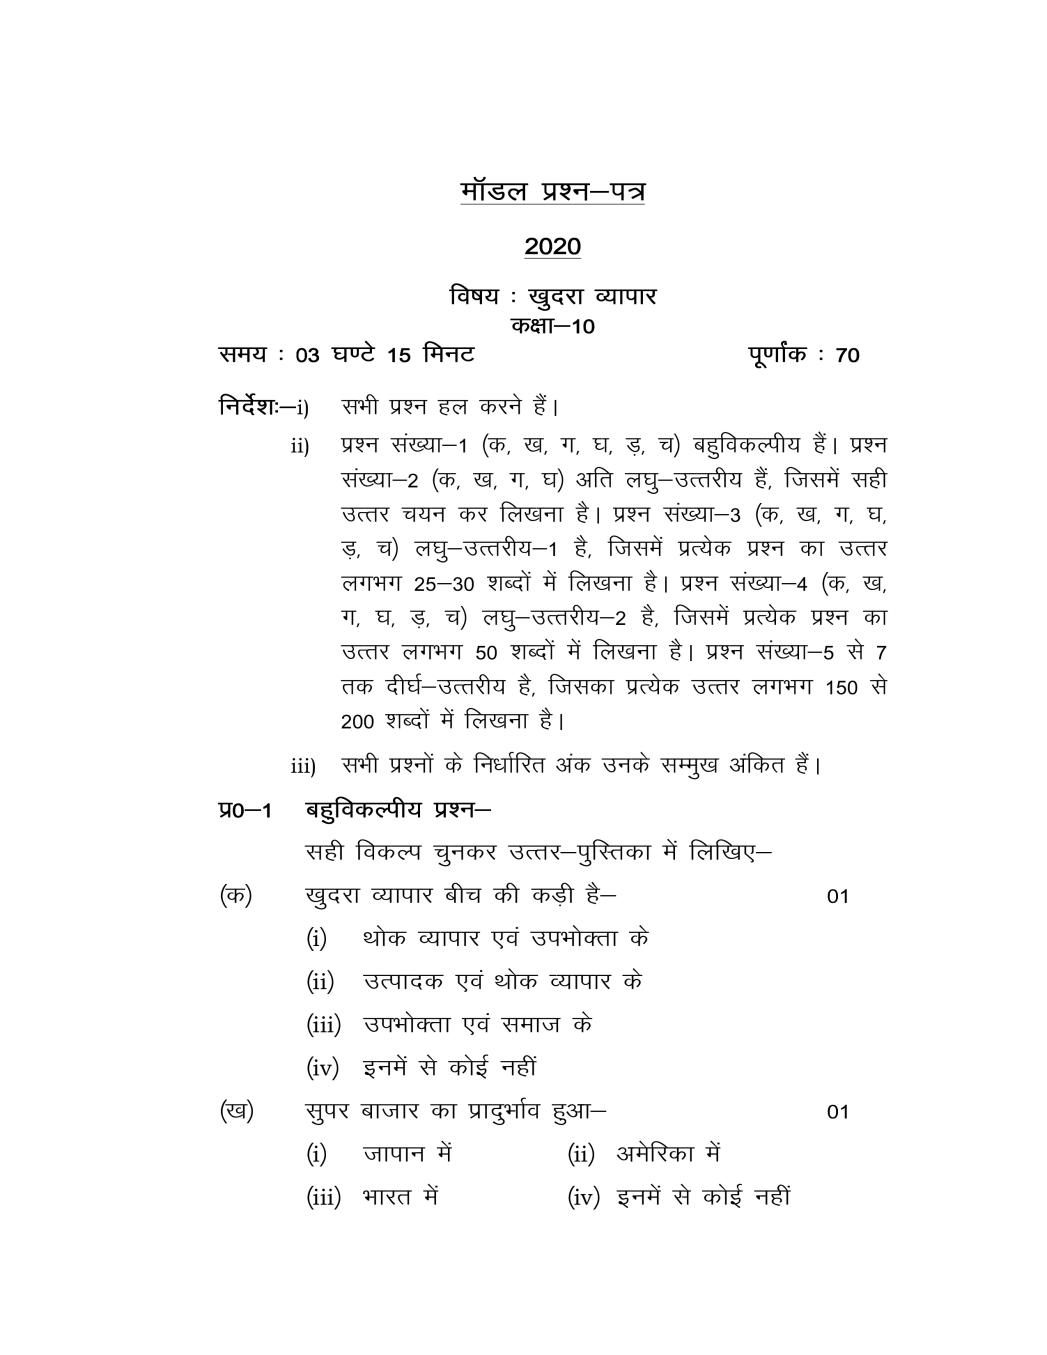 UP Board Class 10 Model Question Paper 2020 Khudra Vyapar - Page 1